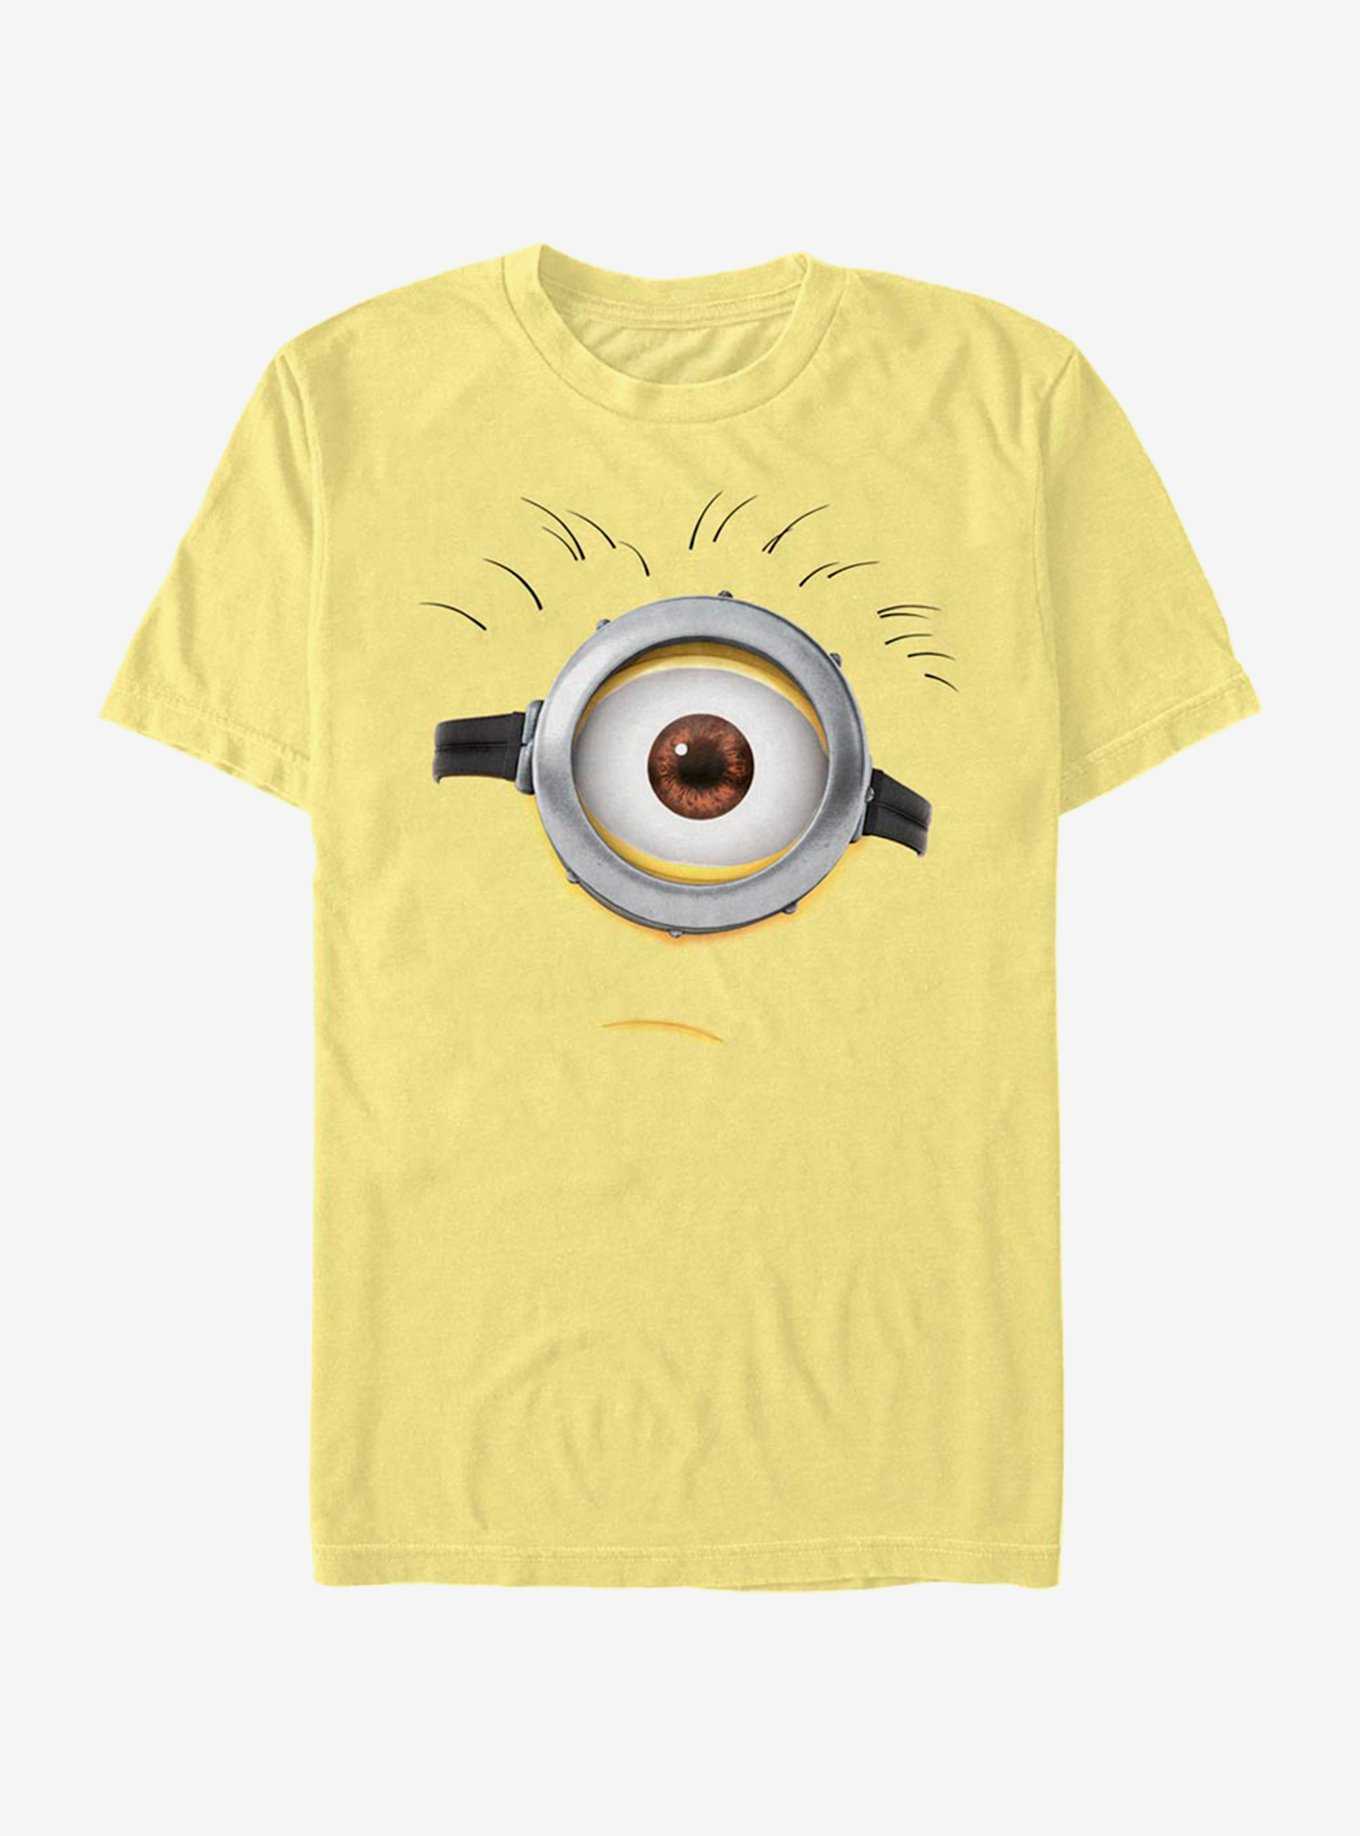 Minions Frown Face T-Shirt, , hi-res